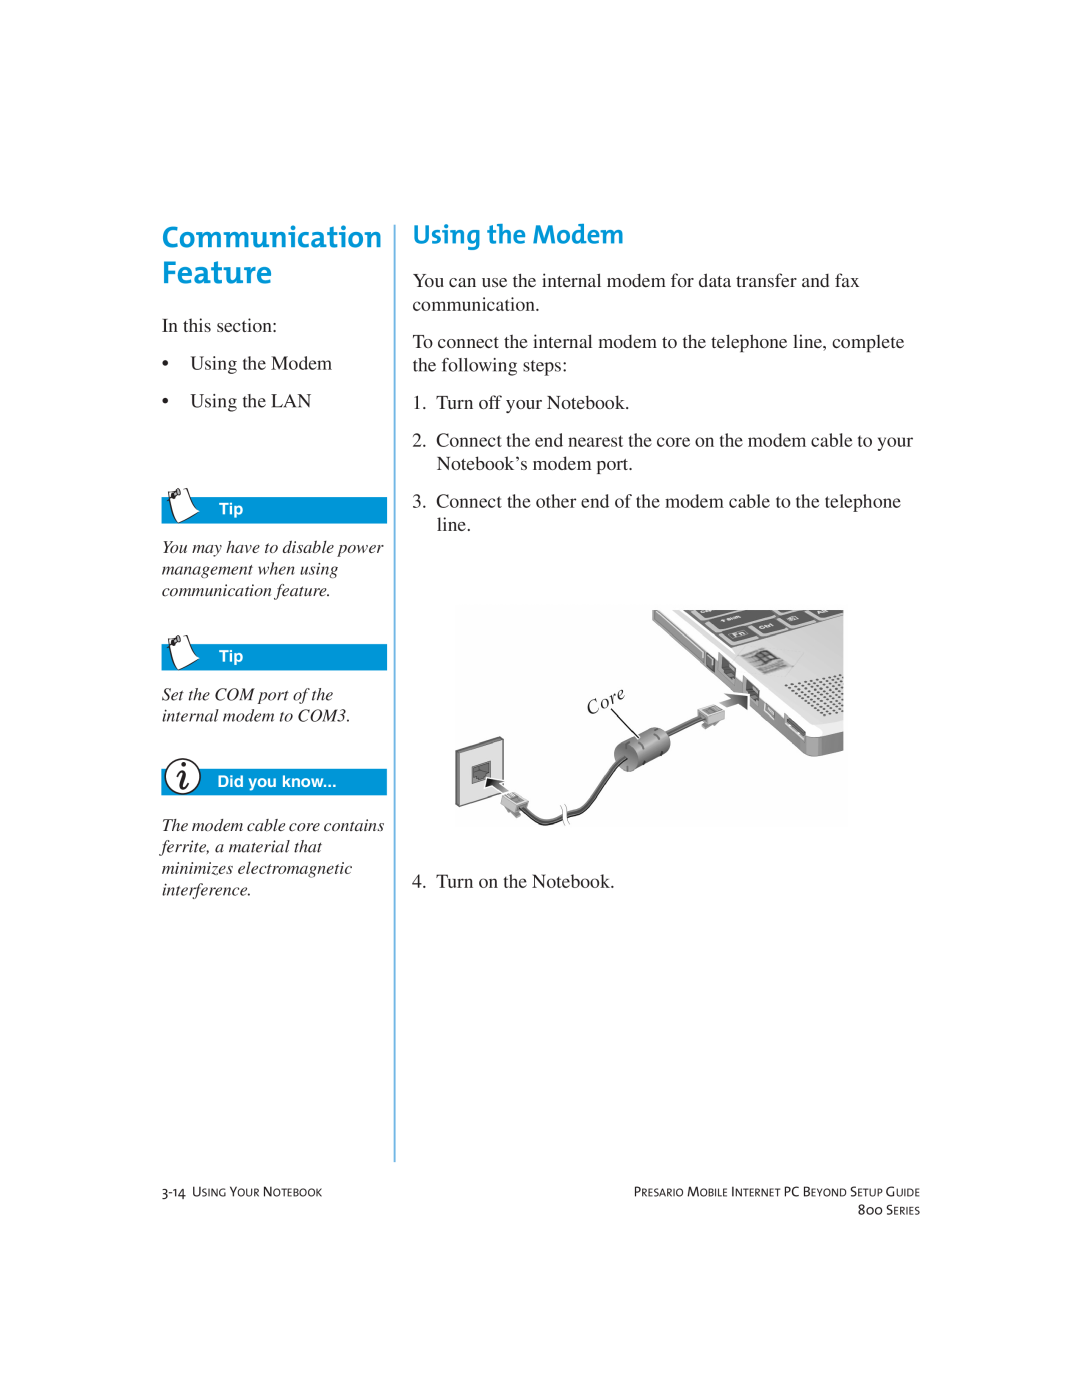 Compaq 800 manual Feature, Using the Modem, Communication 